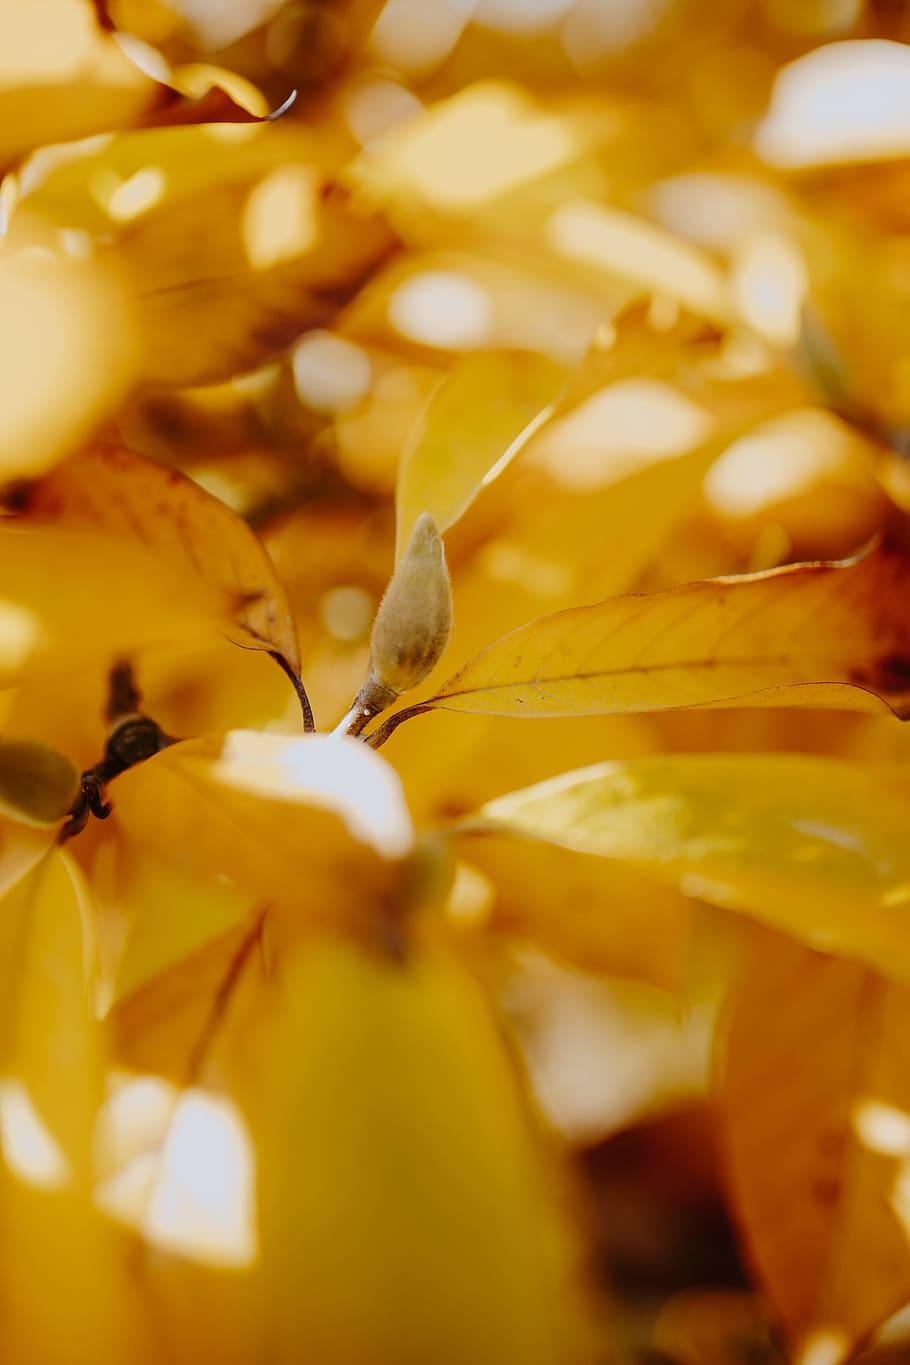 HD wallpaper: Yellow leaves of magnolia in autumn, orange